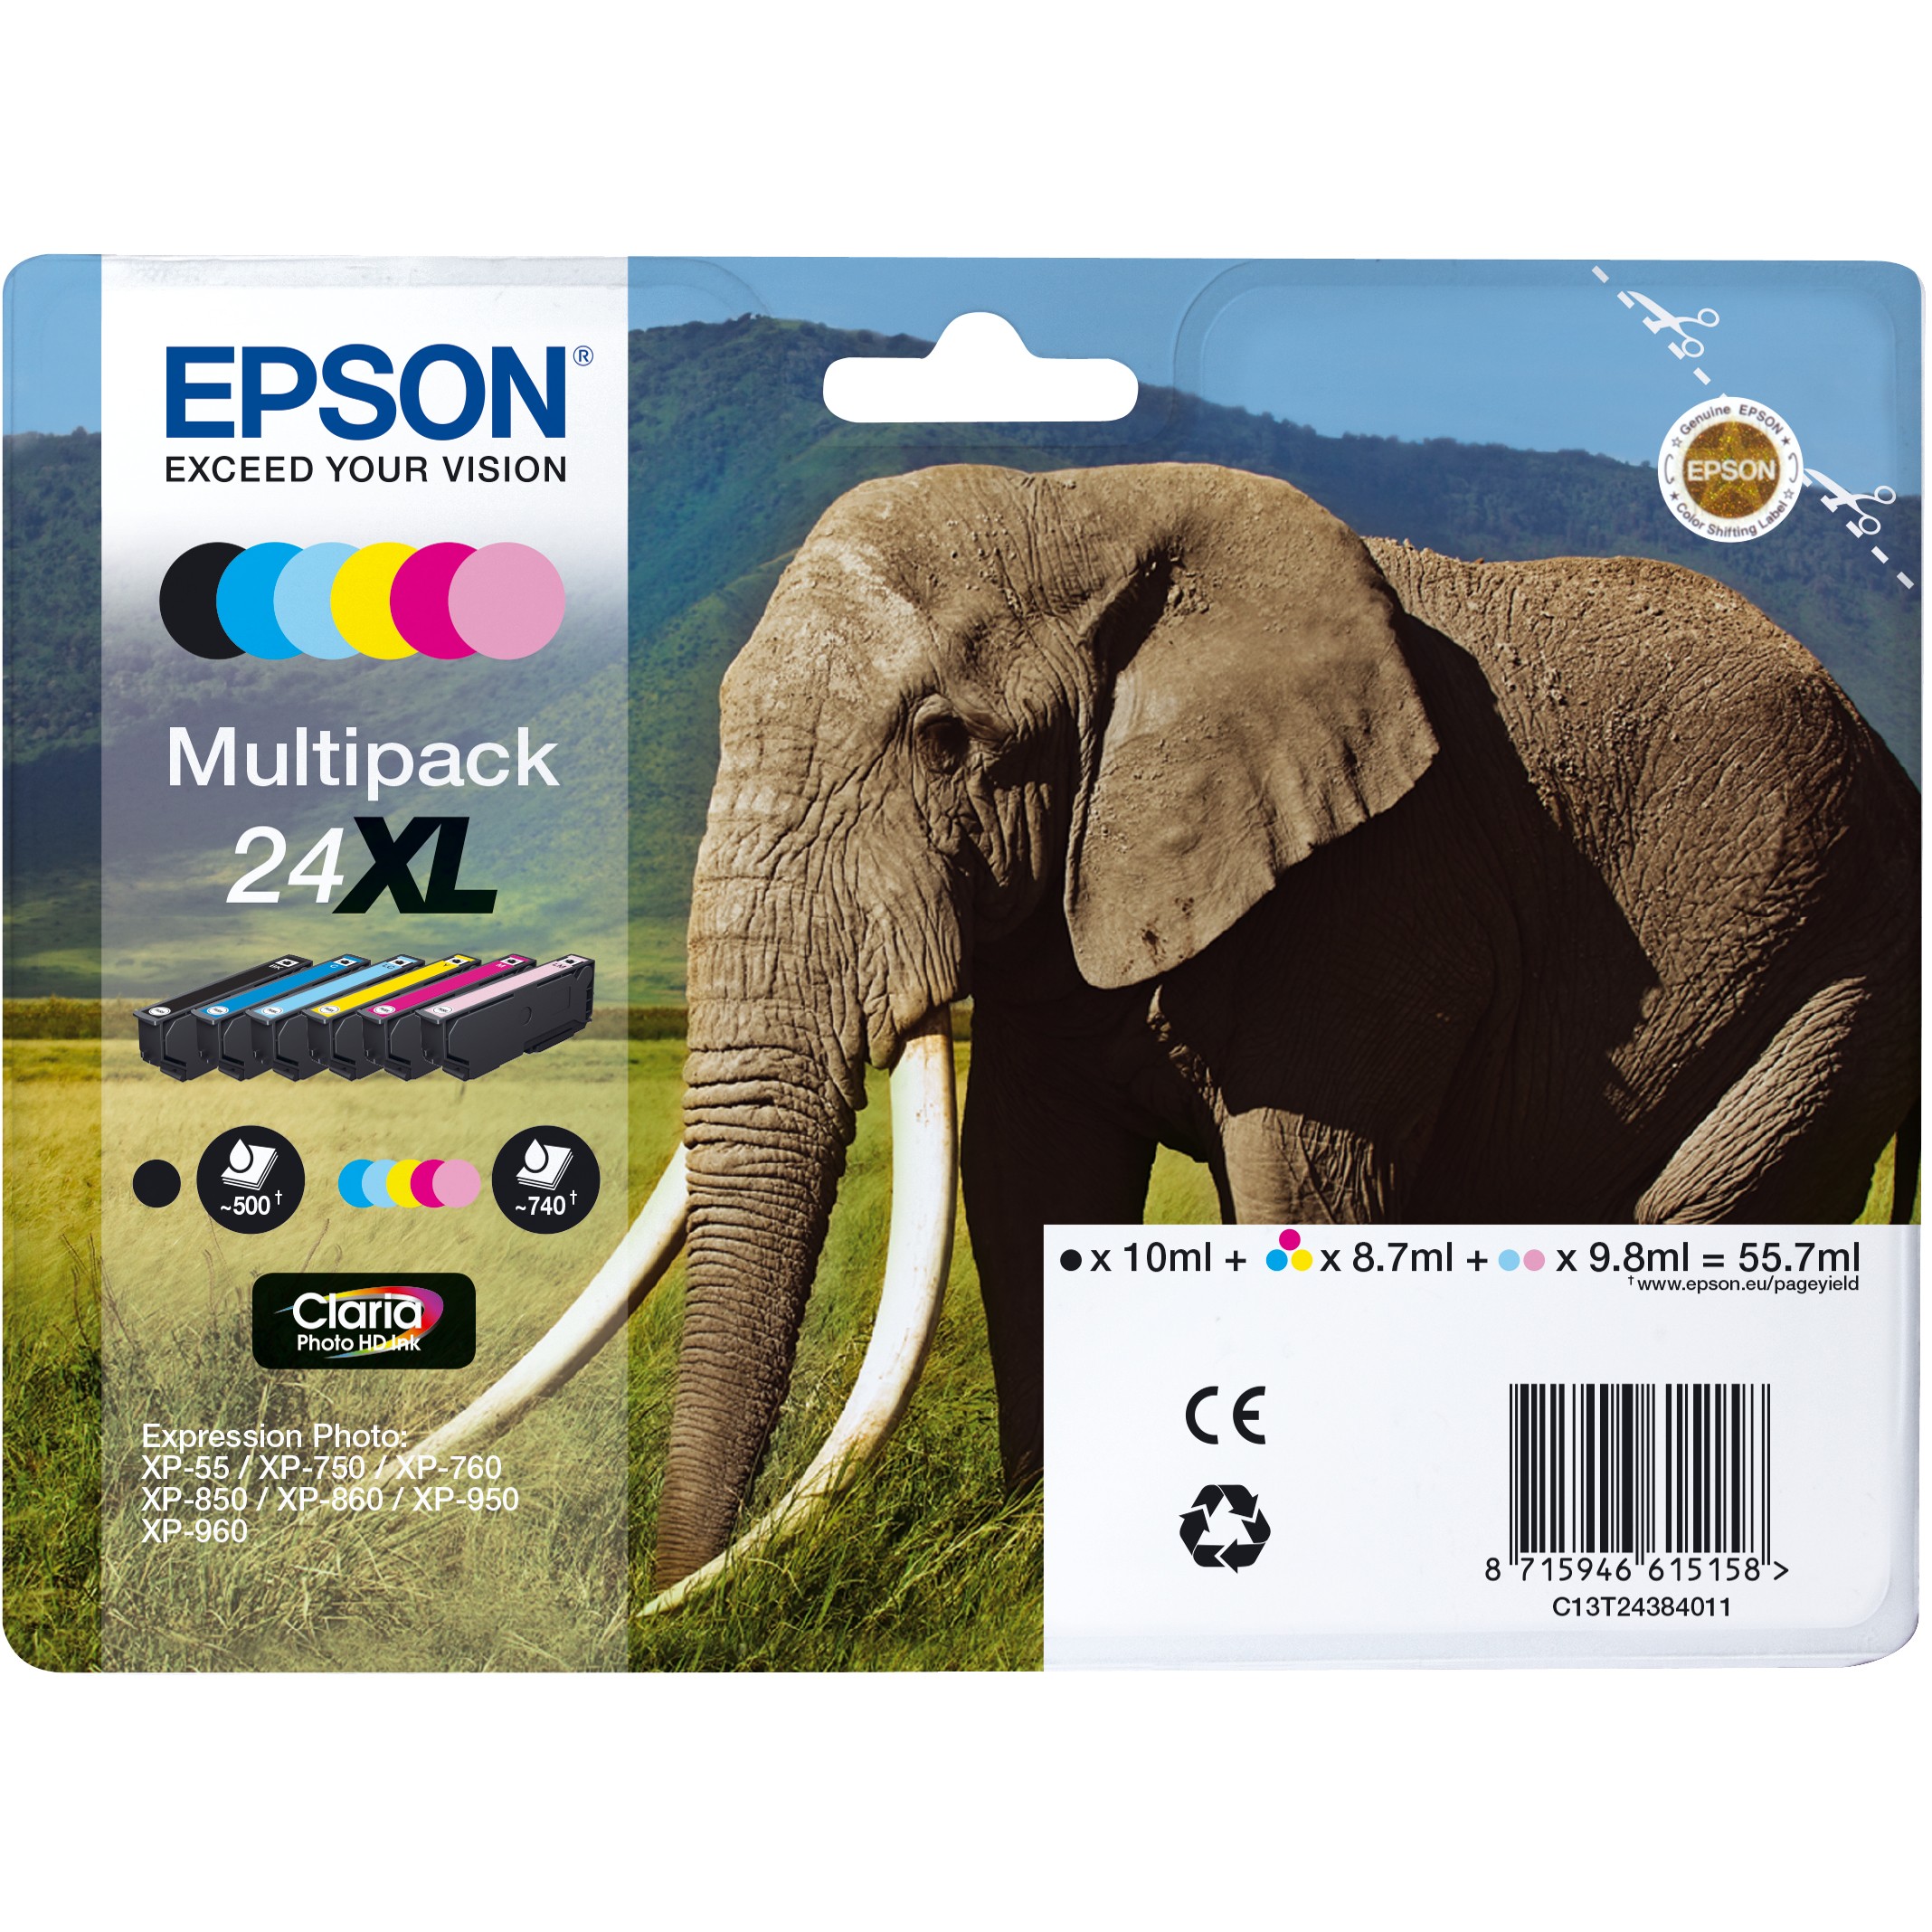 Epson Elephant C13T24384011 ink cartridge - C13T24384011